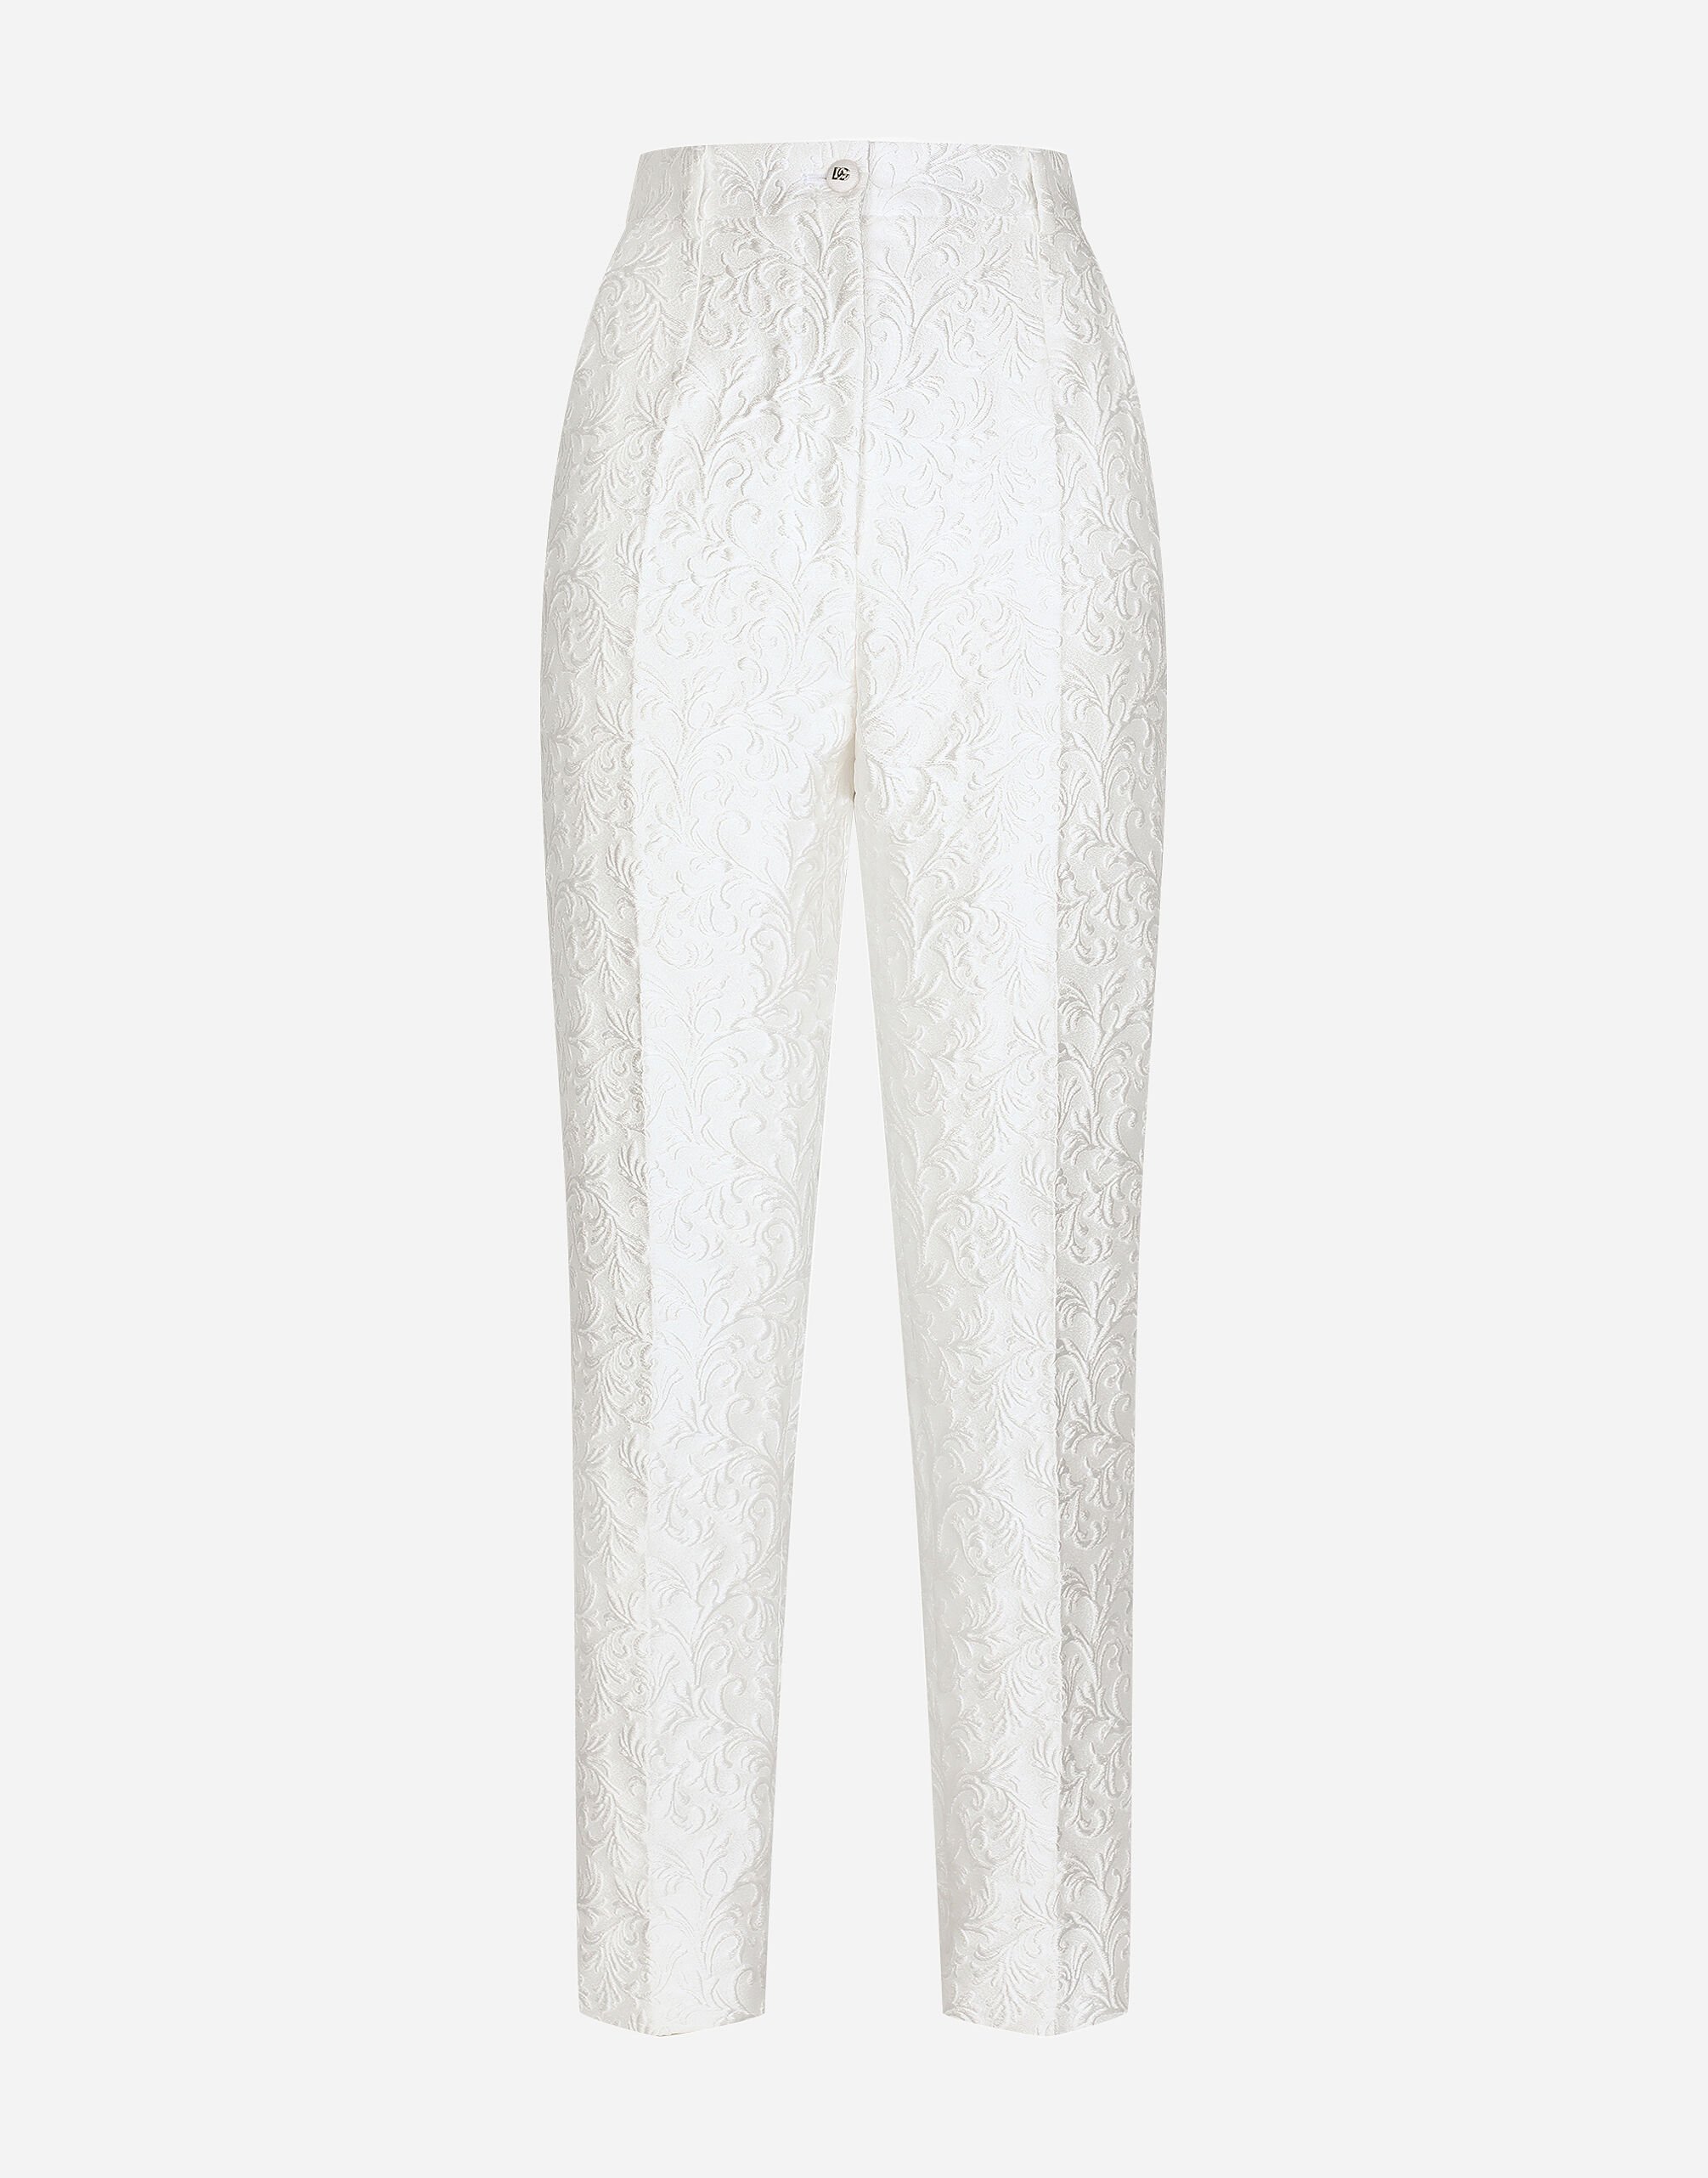 Dolce & Gabbana Brocade pants Print FTCJUTHS5NO